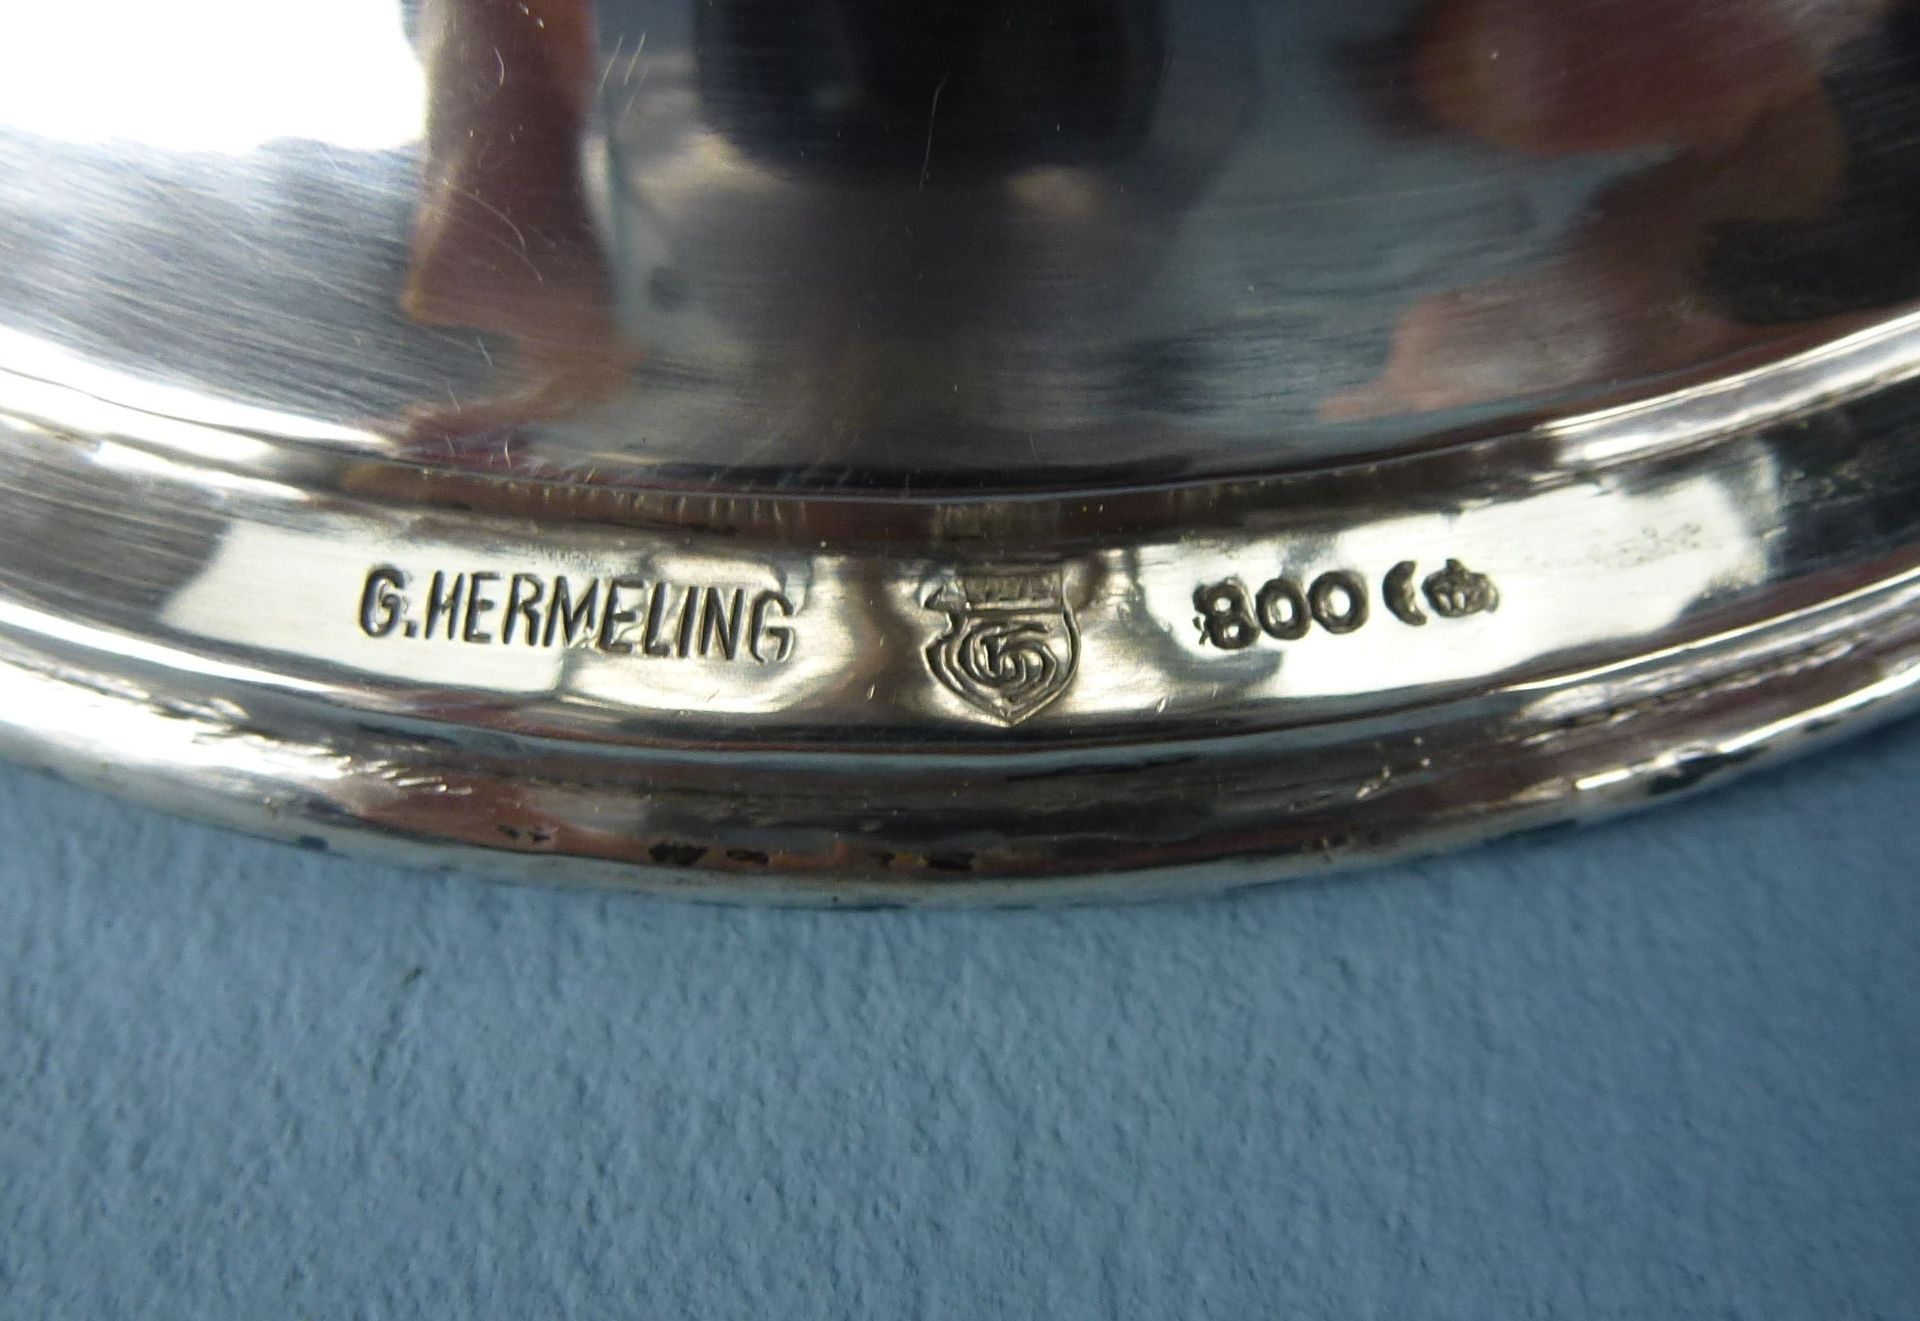 Ballonfahrt-Pokal, Gabriel Hermeling, Köln um 1910, 800er Silber - Image 6 of 8